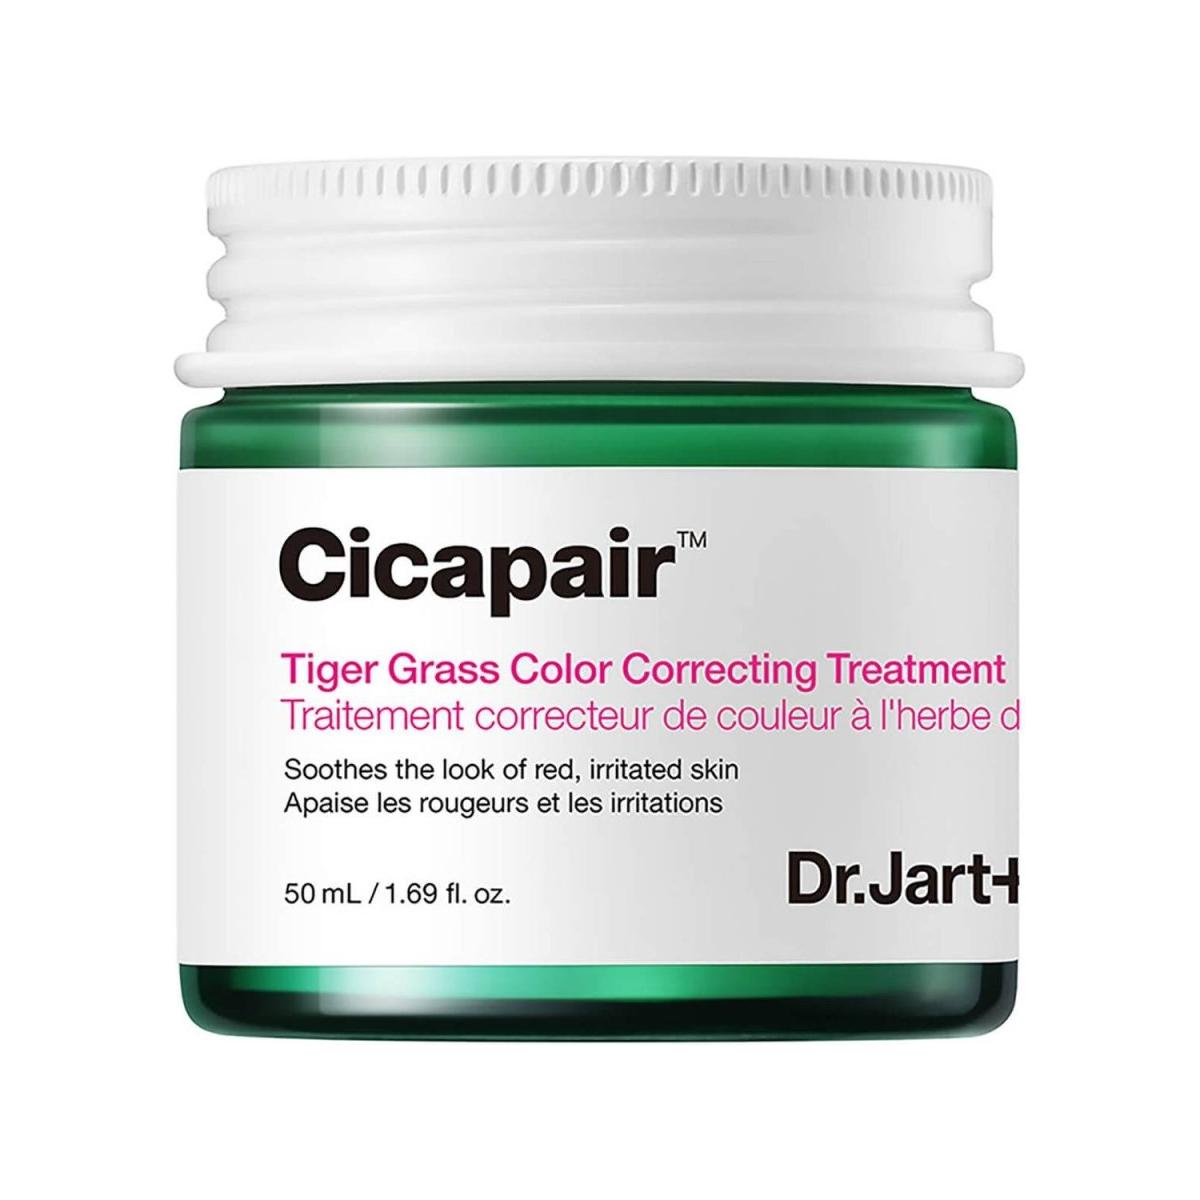 Dr. Jart+ Cicapair Tiger Grass Color Correcting Treatment 50ml - DG International Ventures Limited